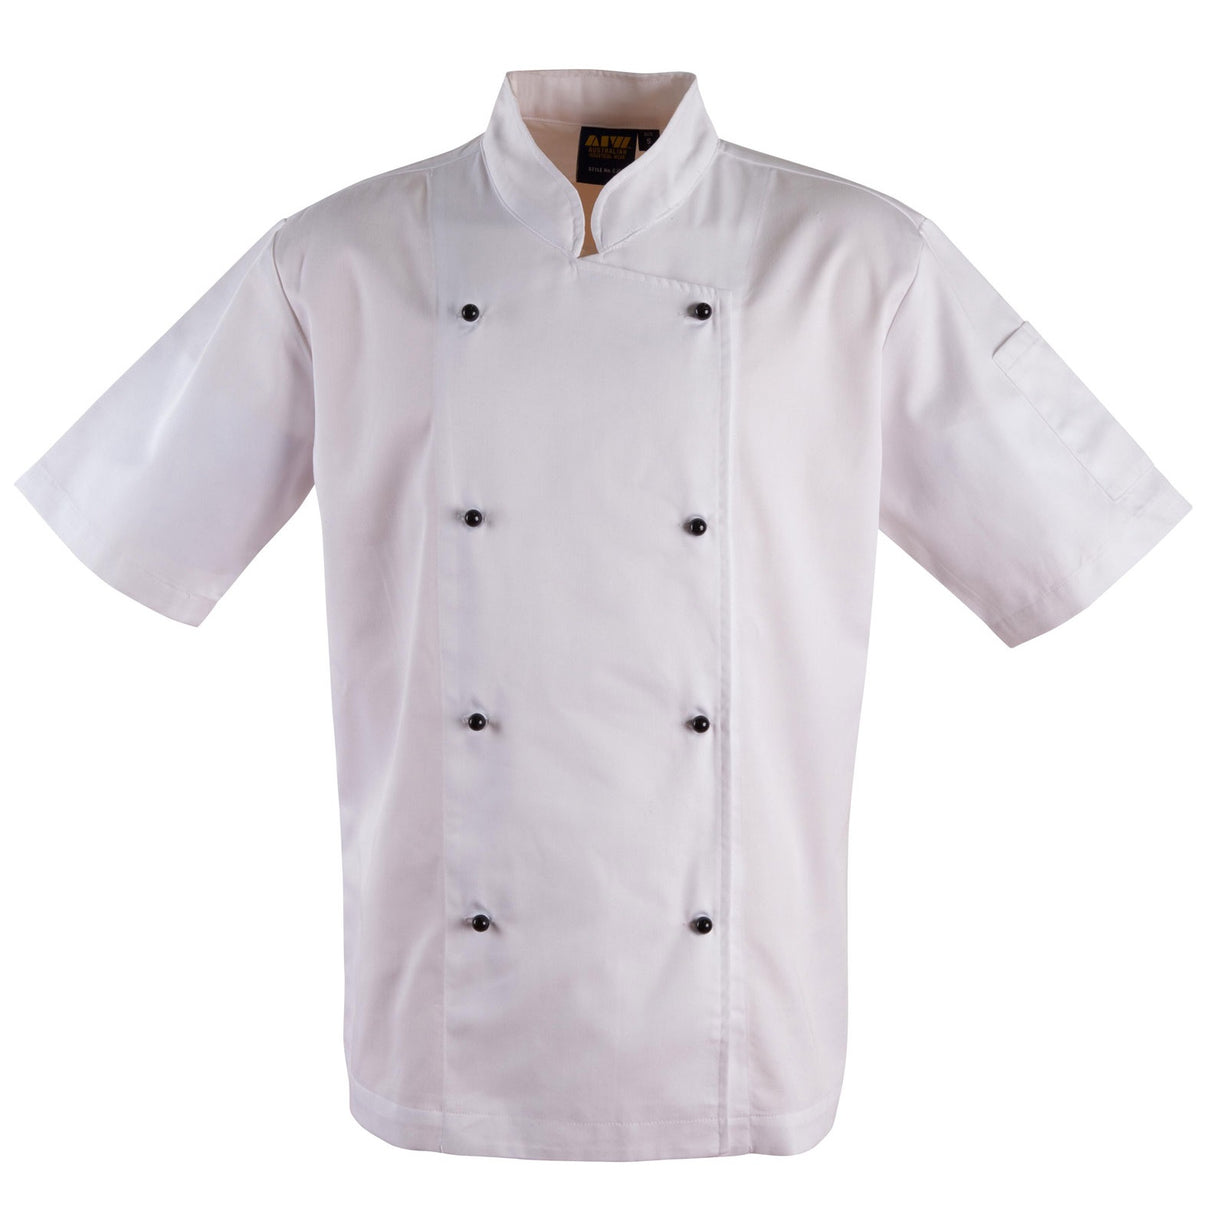 CJ02 Chef's Short Sleeve Jacket